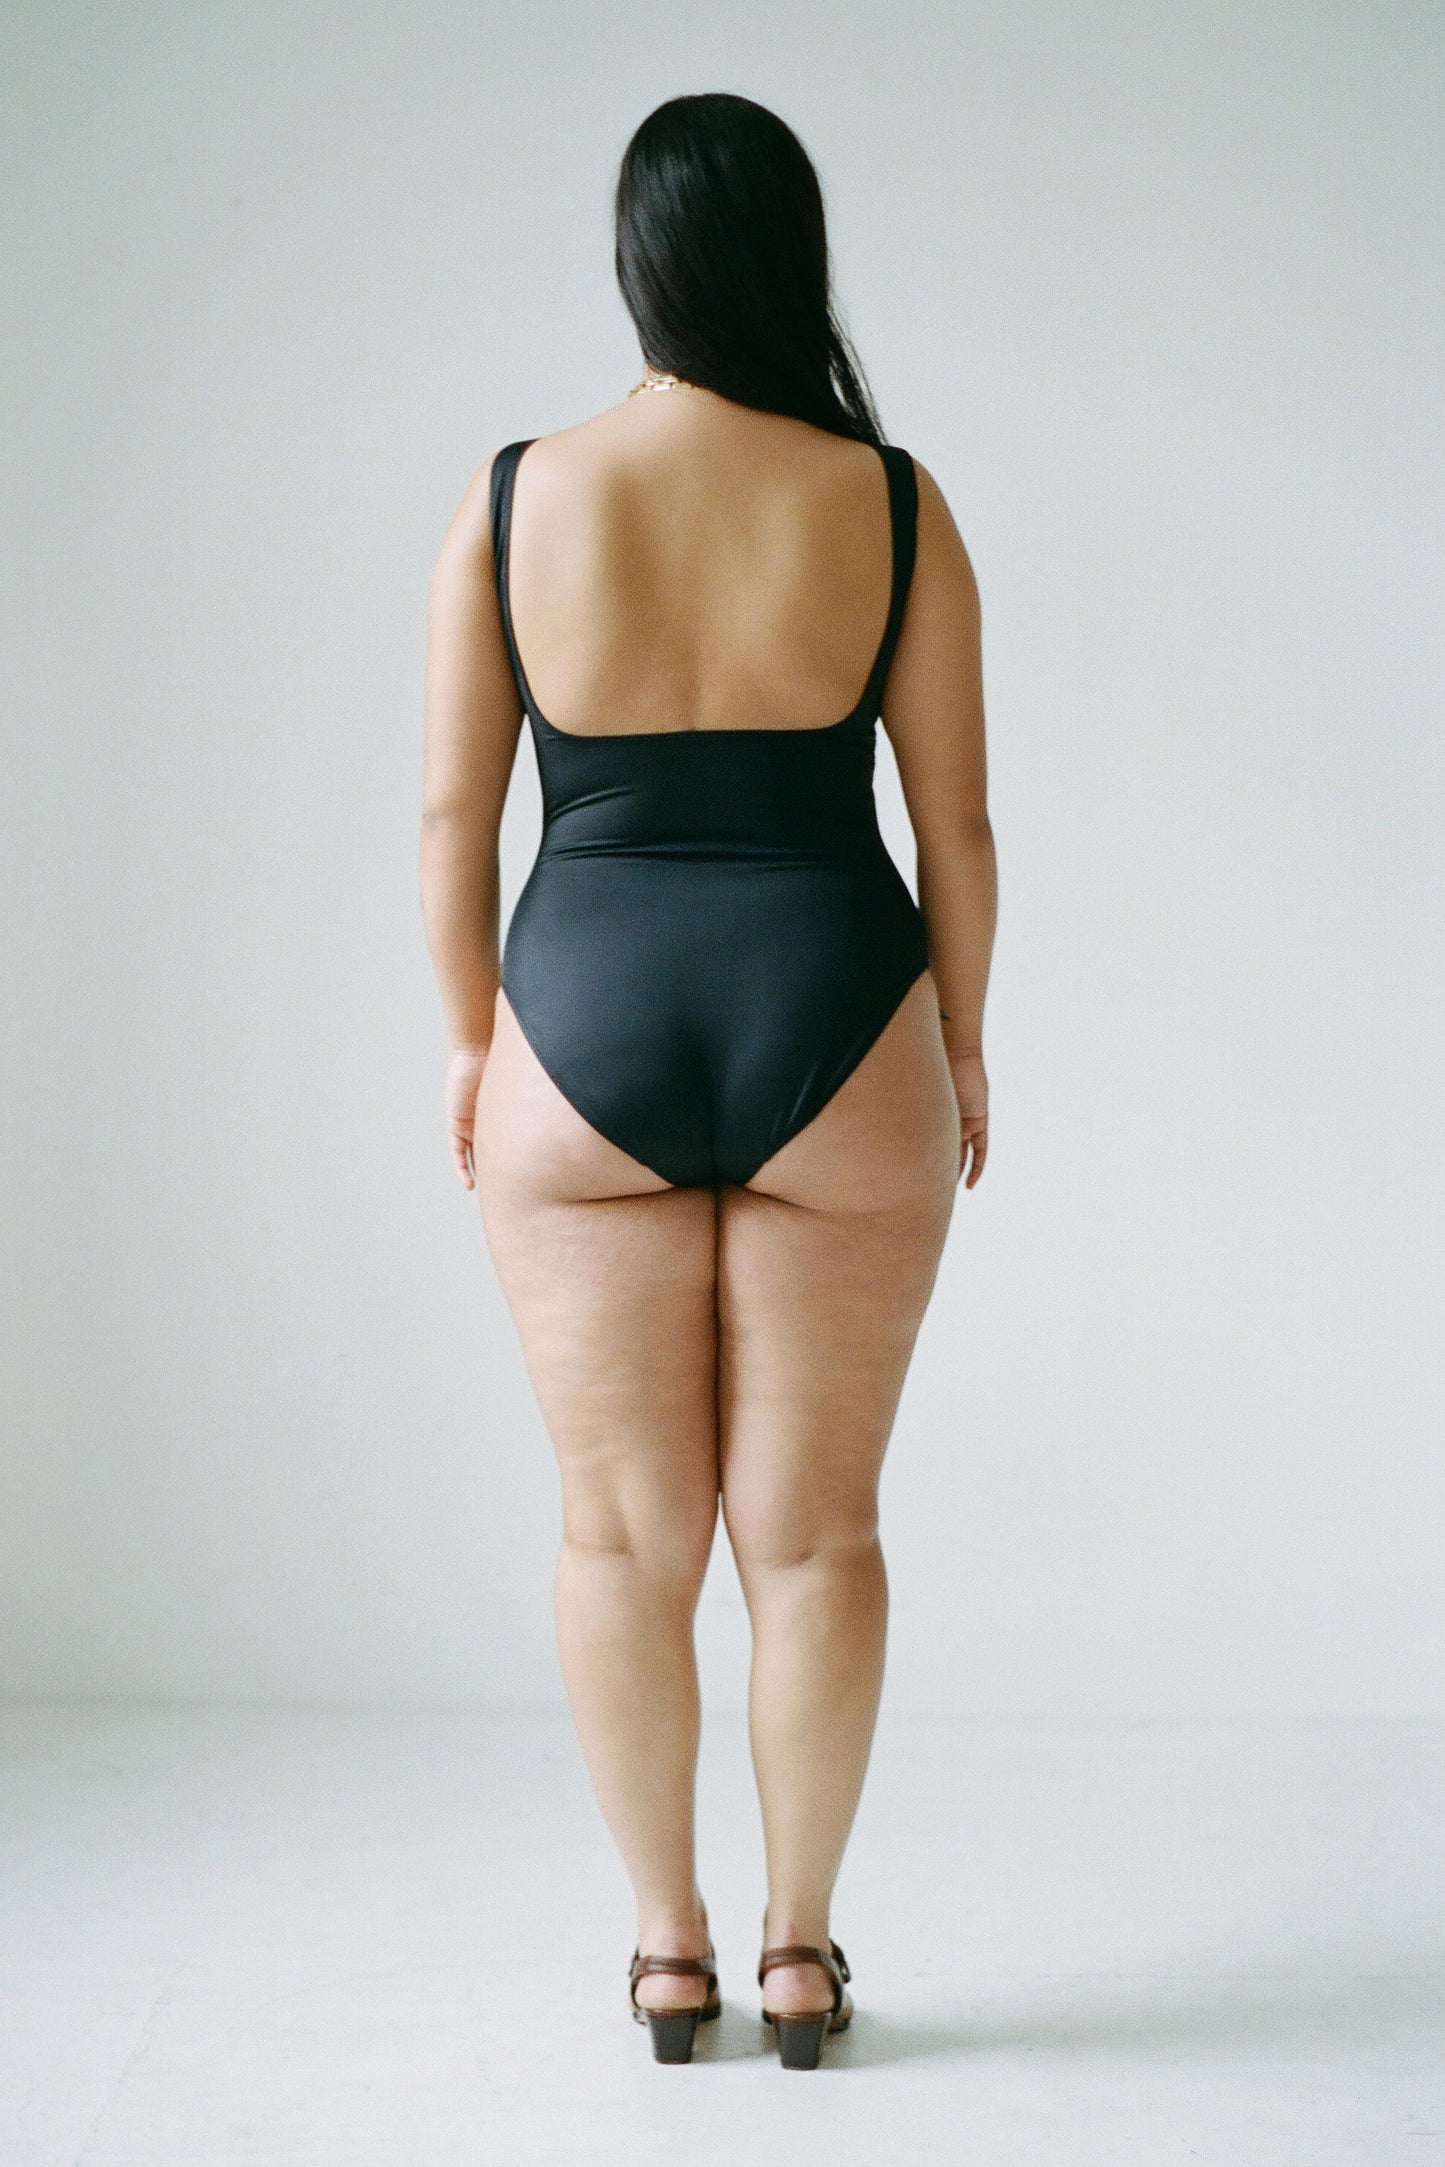 Sylph Swimsuit - Black